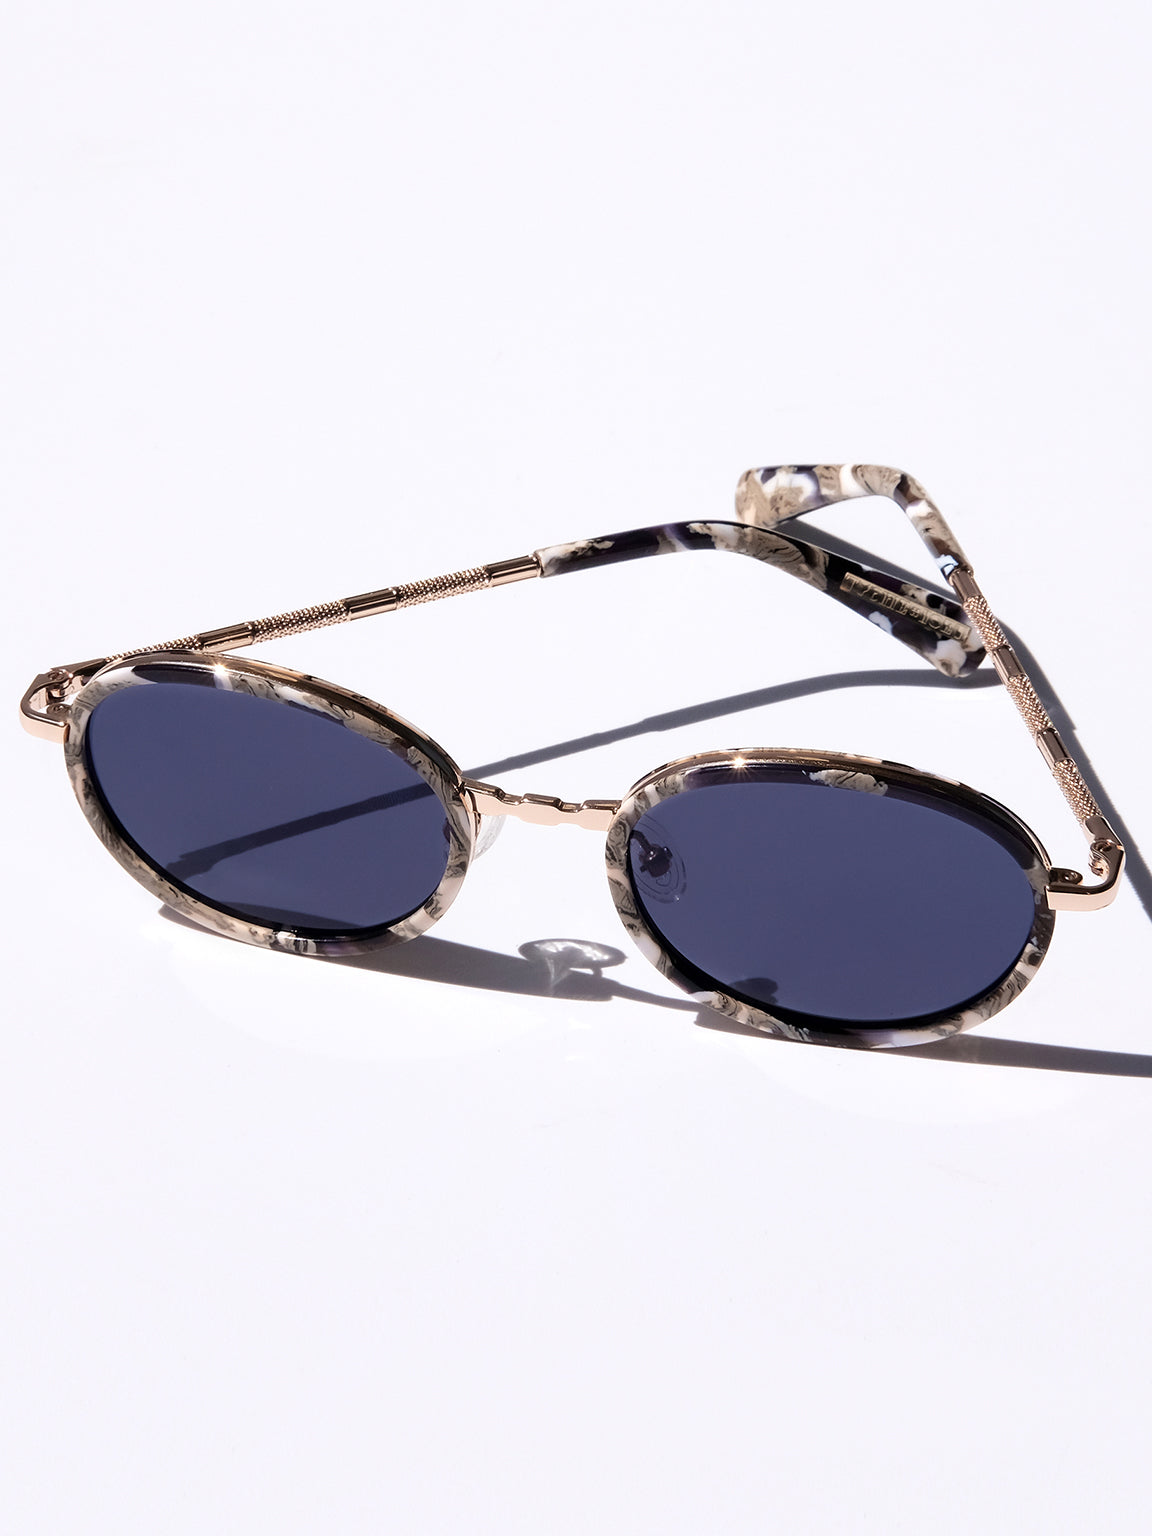 Classic Oval Metal Sunglasses. Gold Glasses. Round Sunglasses. Metal Glasses.  Luxury